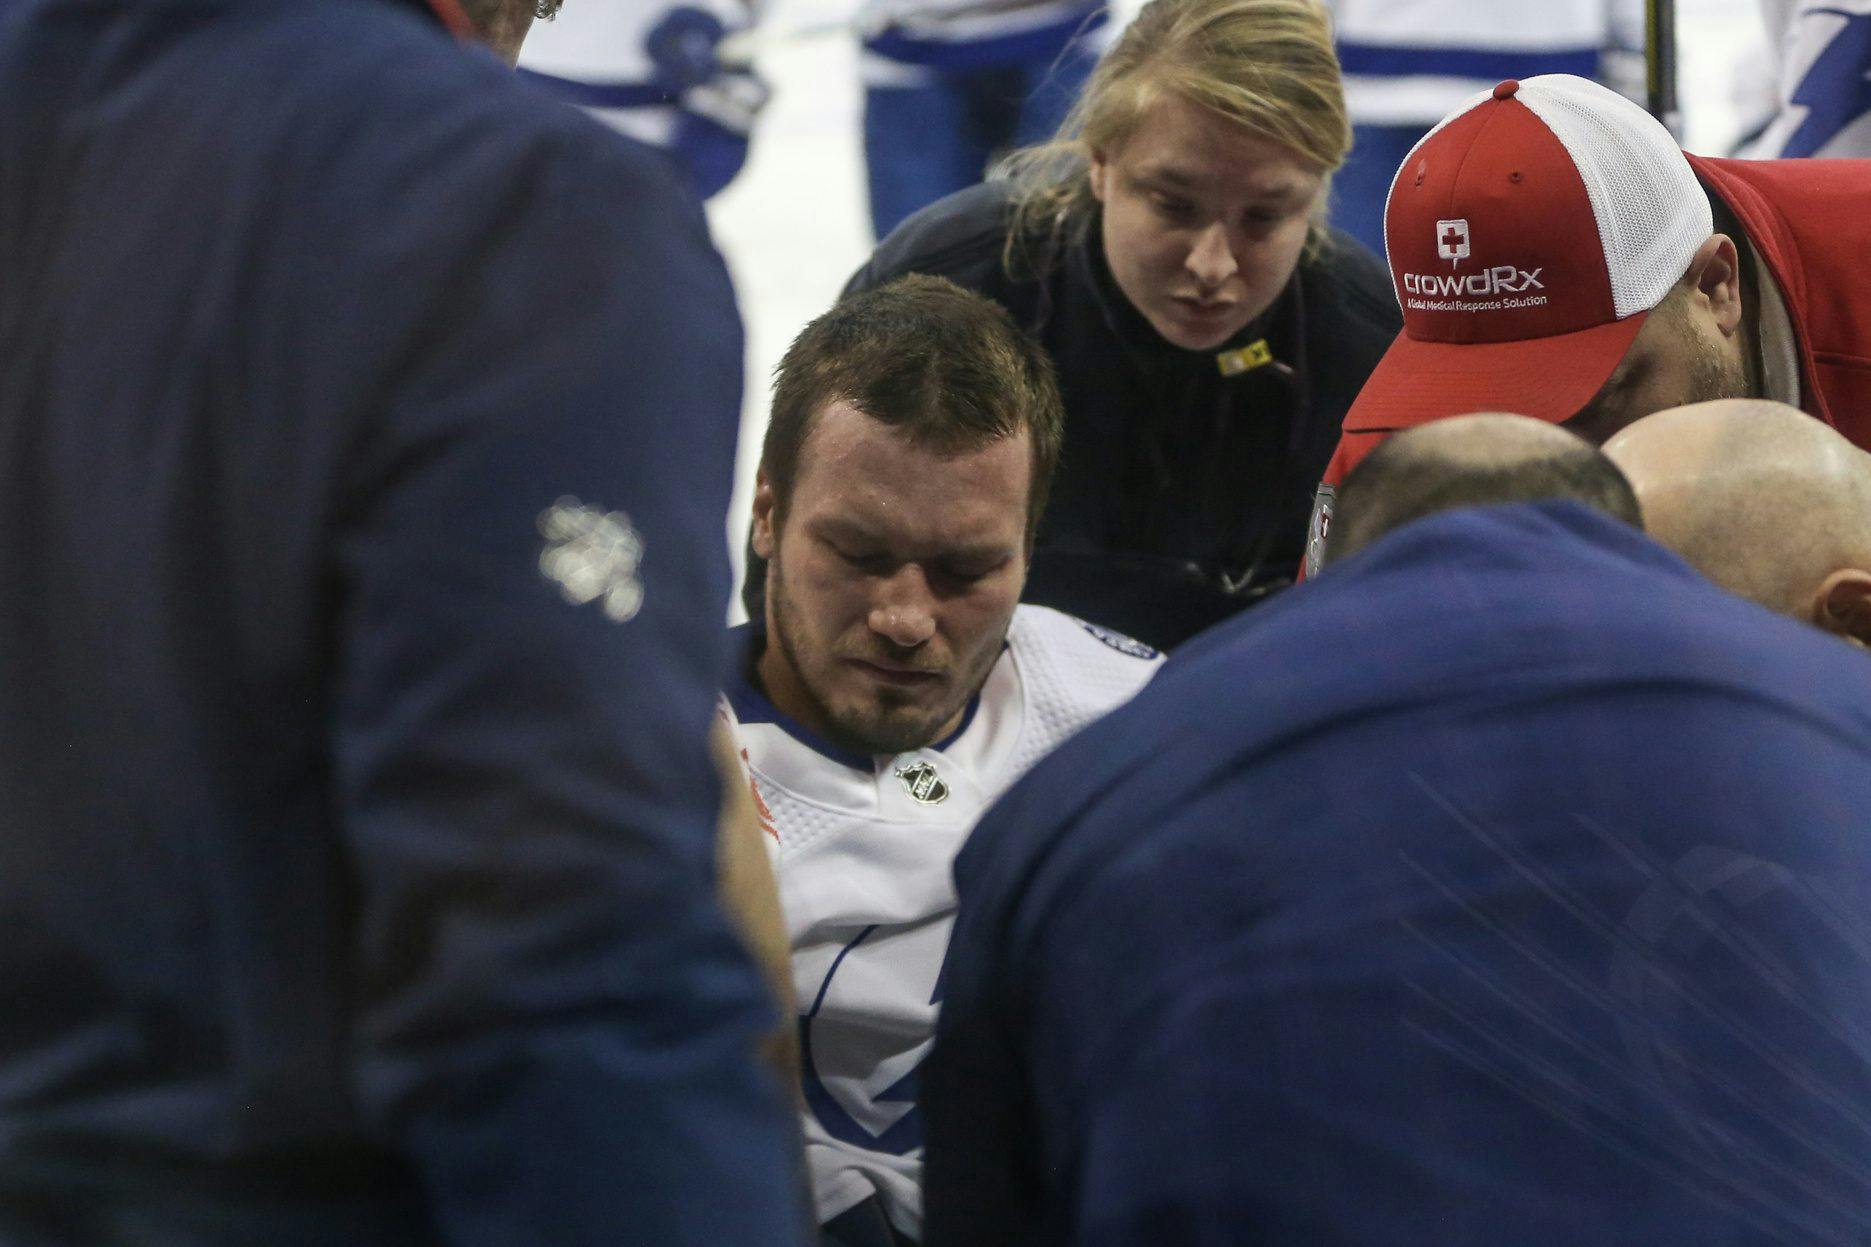 Tampa Bay Lightning’s Mikhail Sergachev has surgery to repair a broken tibia and fibula, has no timetable for return